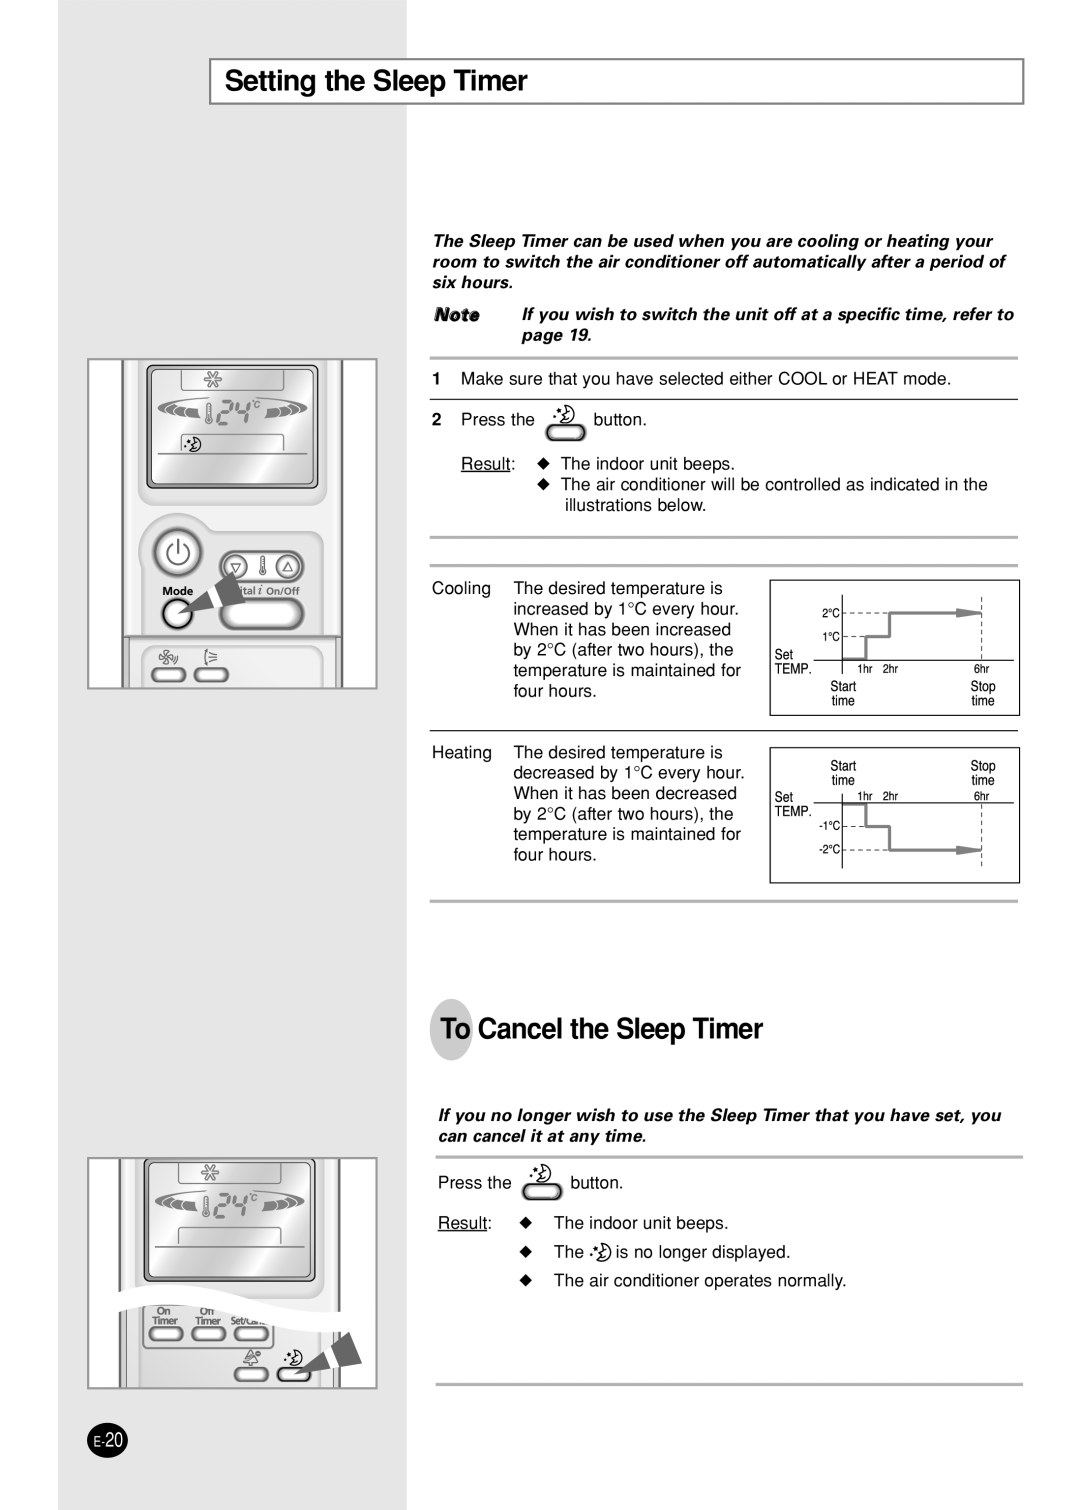 Samsung SH12BPHX, SH09BPHX manuel dutilisation Setting the Sleep Timer, To Cancel the Sleep Timer, page 